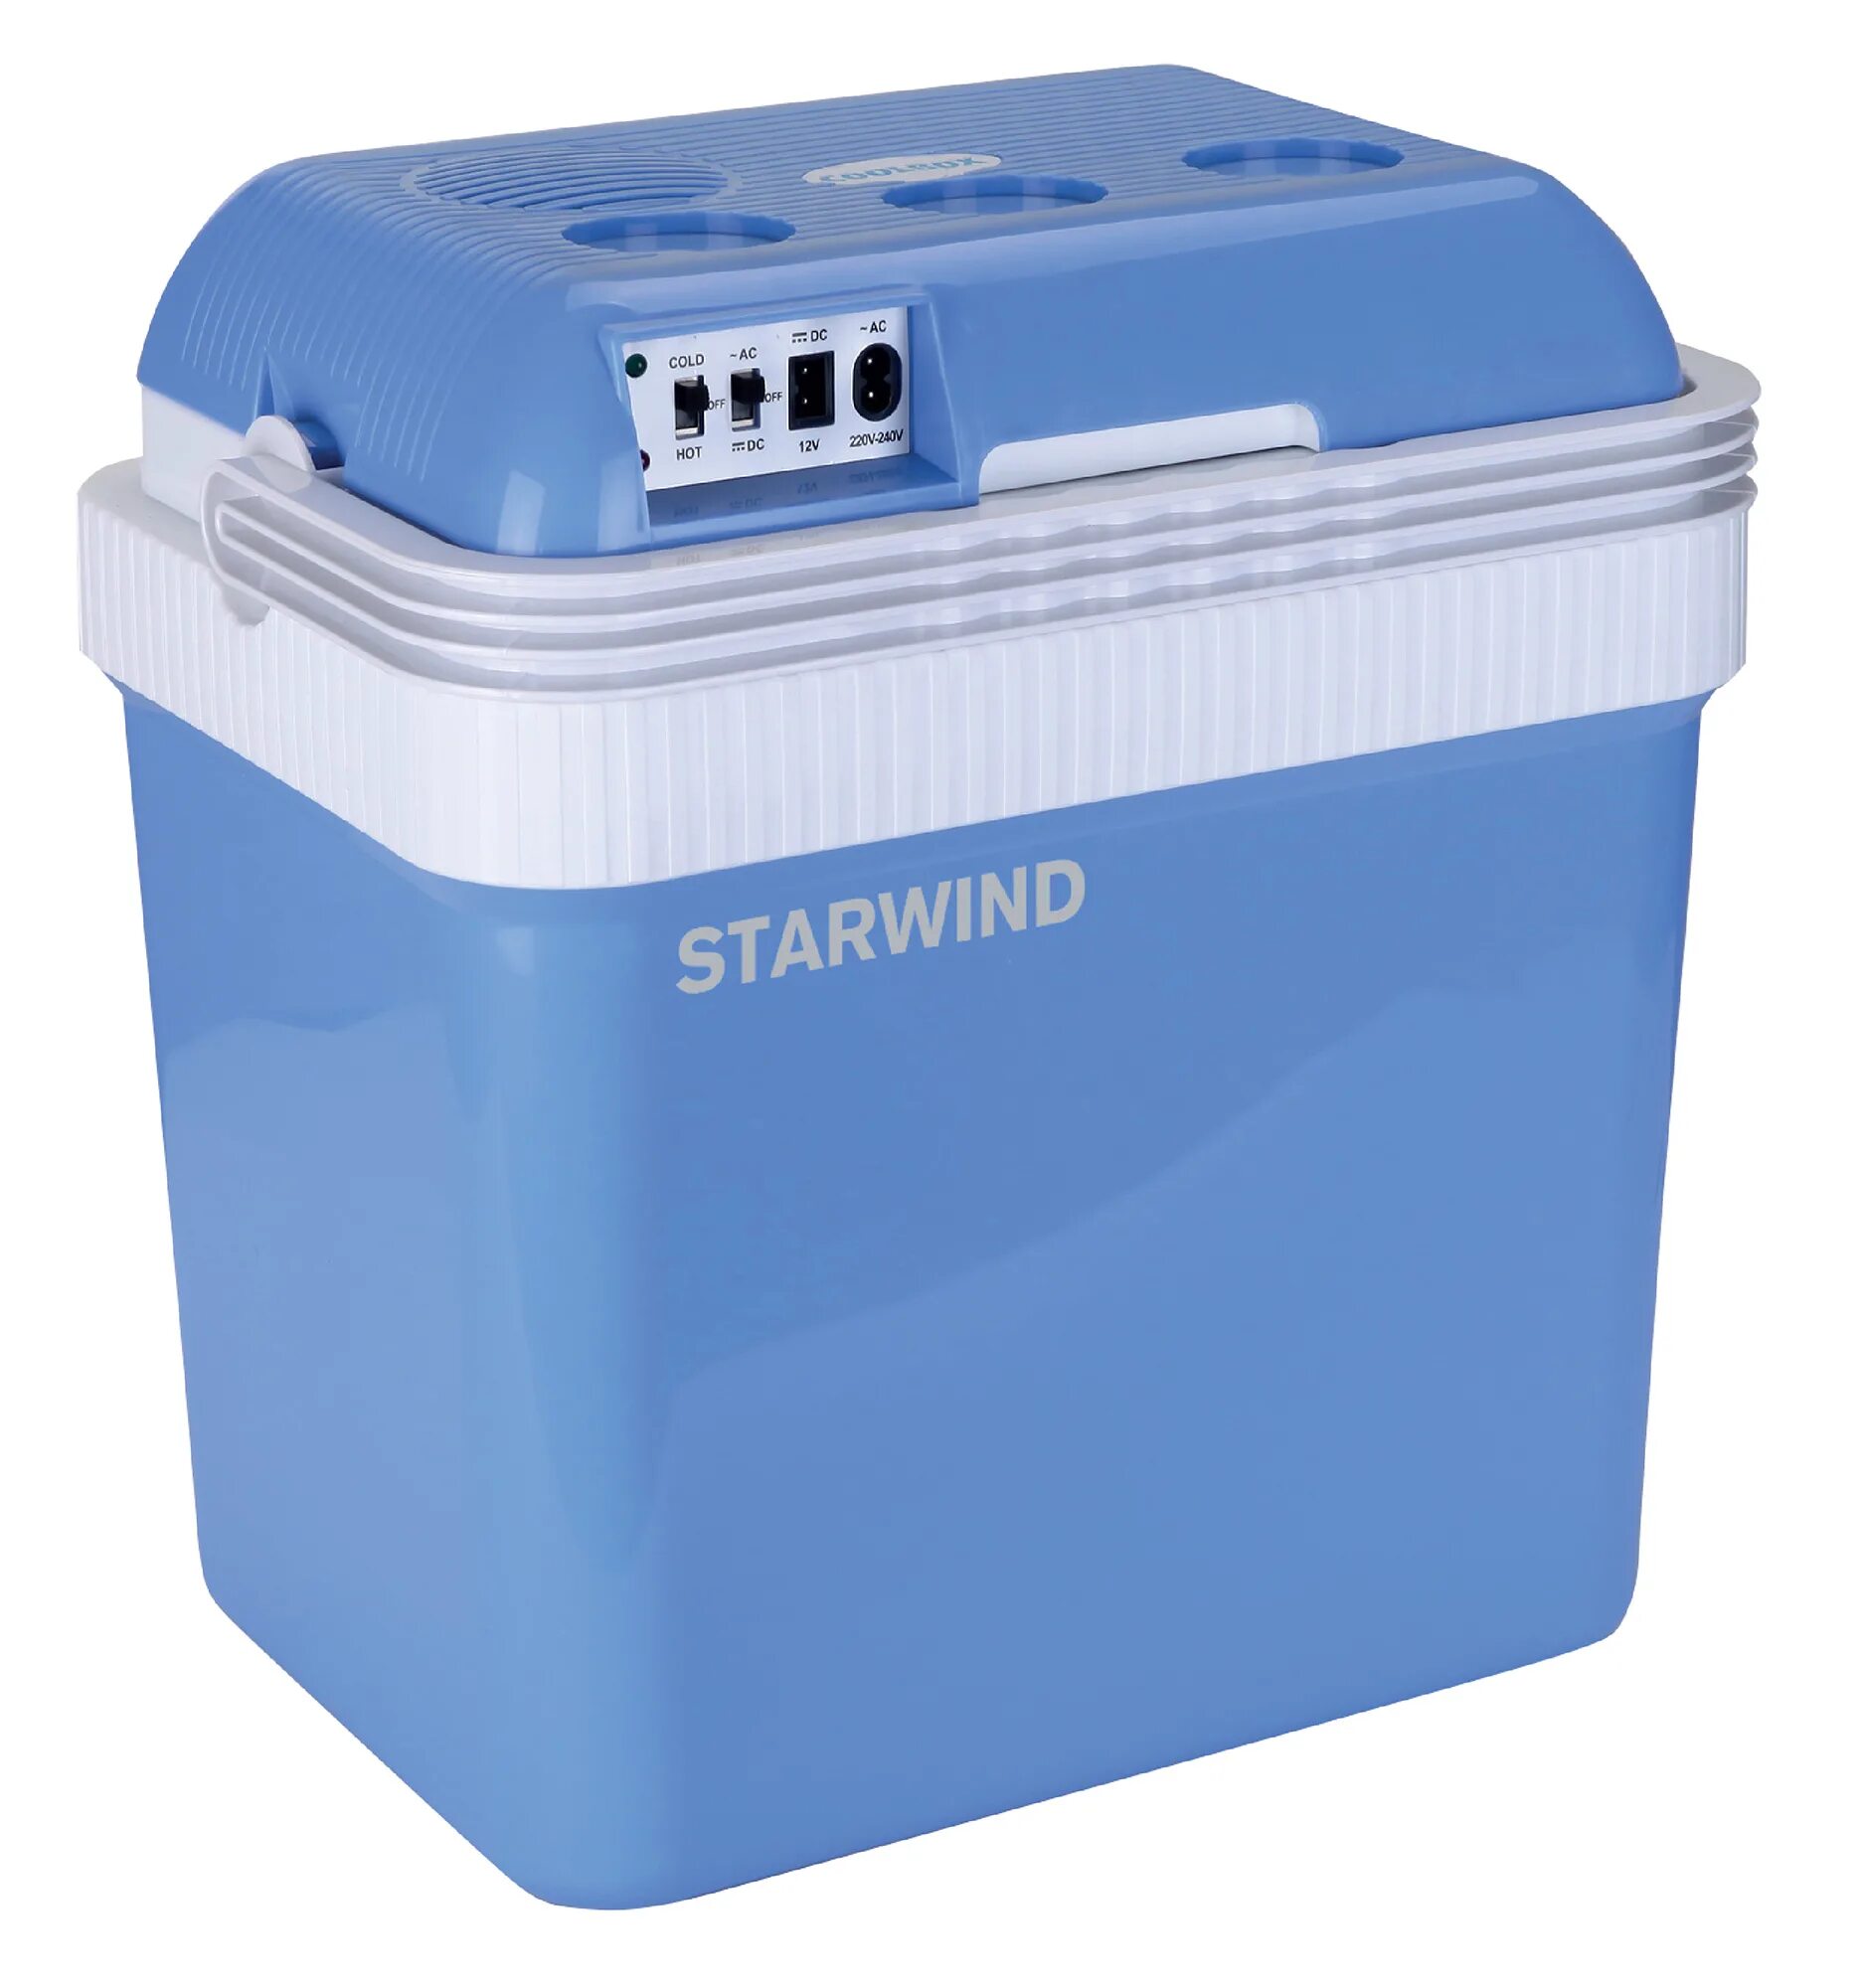 Автохолодильник STARWIND CB-112. Автохолодильник Mystery MTC 16. Автохолодильник STARWIND CB-112, 24л, голубой и белый. STARWIND CB-112, голубой/белый.